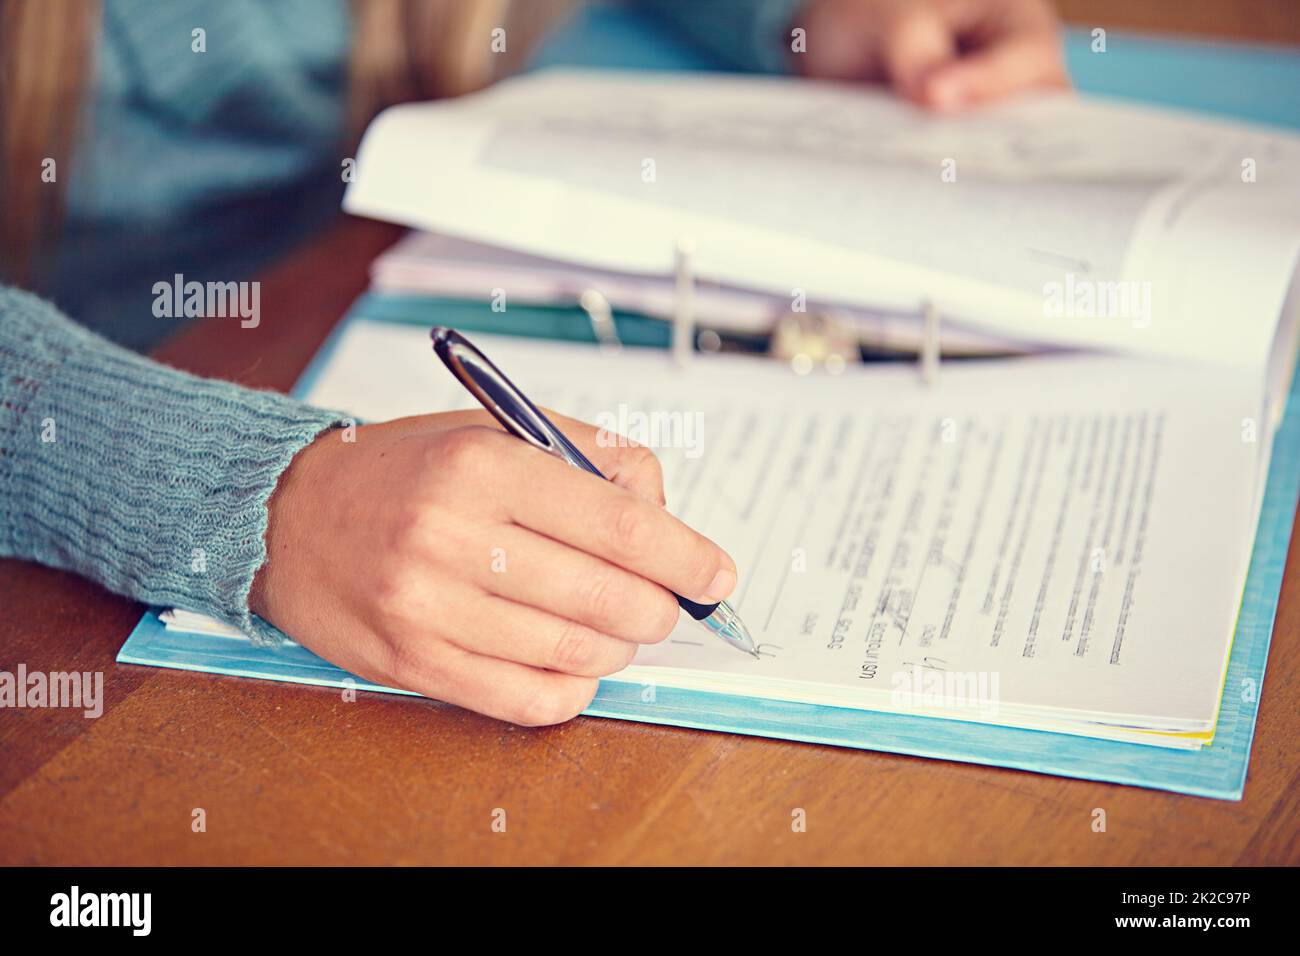 Continual assessment is crucial. Closeup shot of a teacher marking a test. Stock Photo